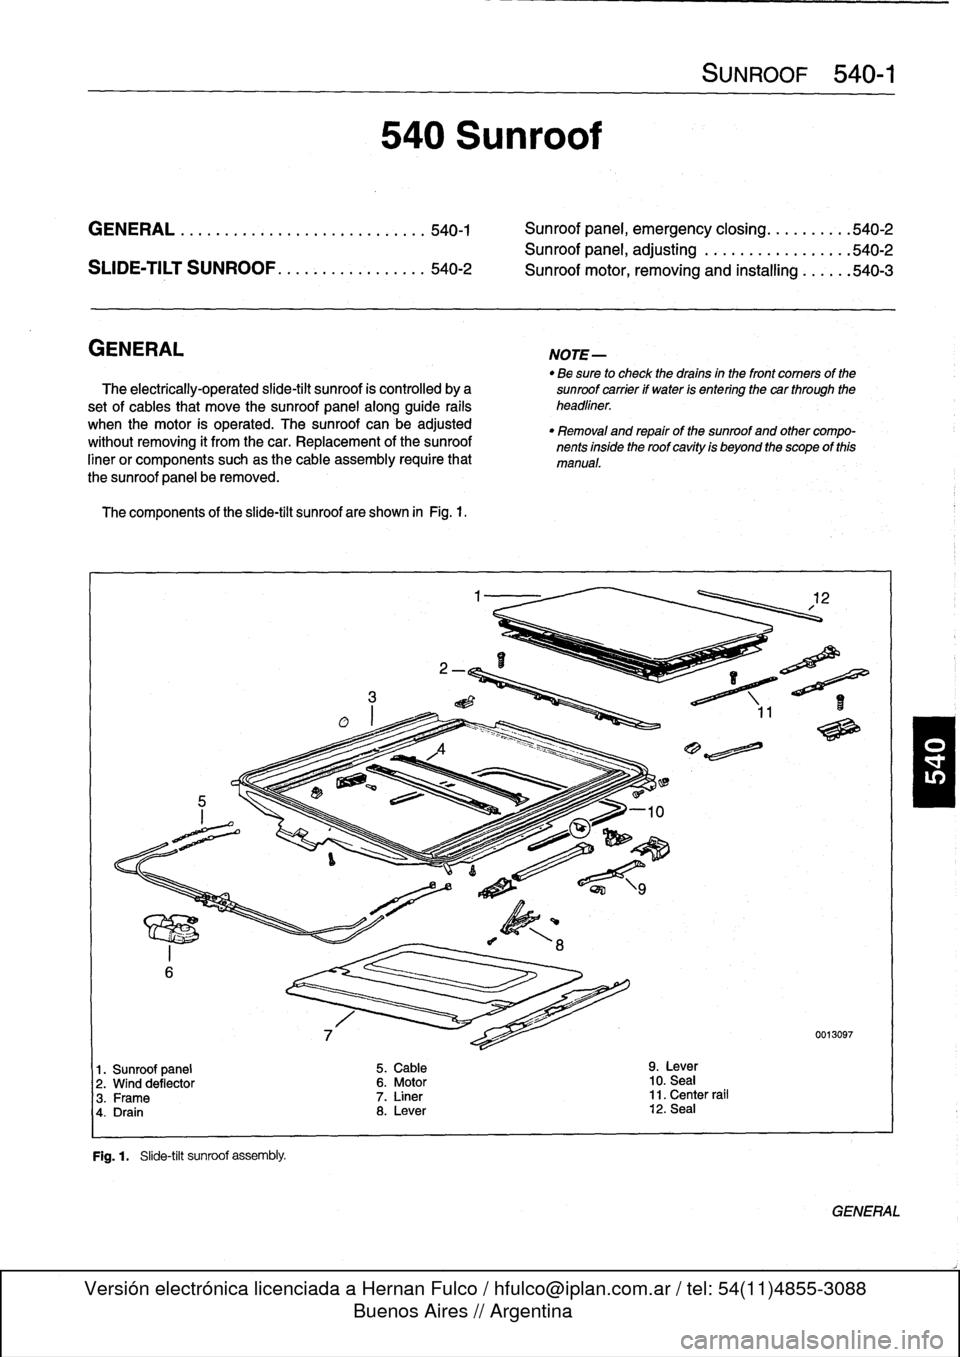 BMW M3 1998 E36 Workshop Manual 
GENERAL
...
.
.
.
.
.
................
.
.
.
.
540-1

	

Sunroof
panel,
emergency
closing
.......
.
.
.540-2

Sunroof
panel,
adjusting
..
.
...........
.
.
.540-2

SUDE-TILT
SUNROOF
.
.
.
.
.
.
.
.
.